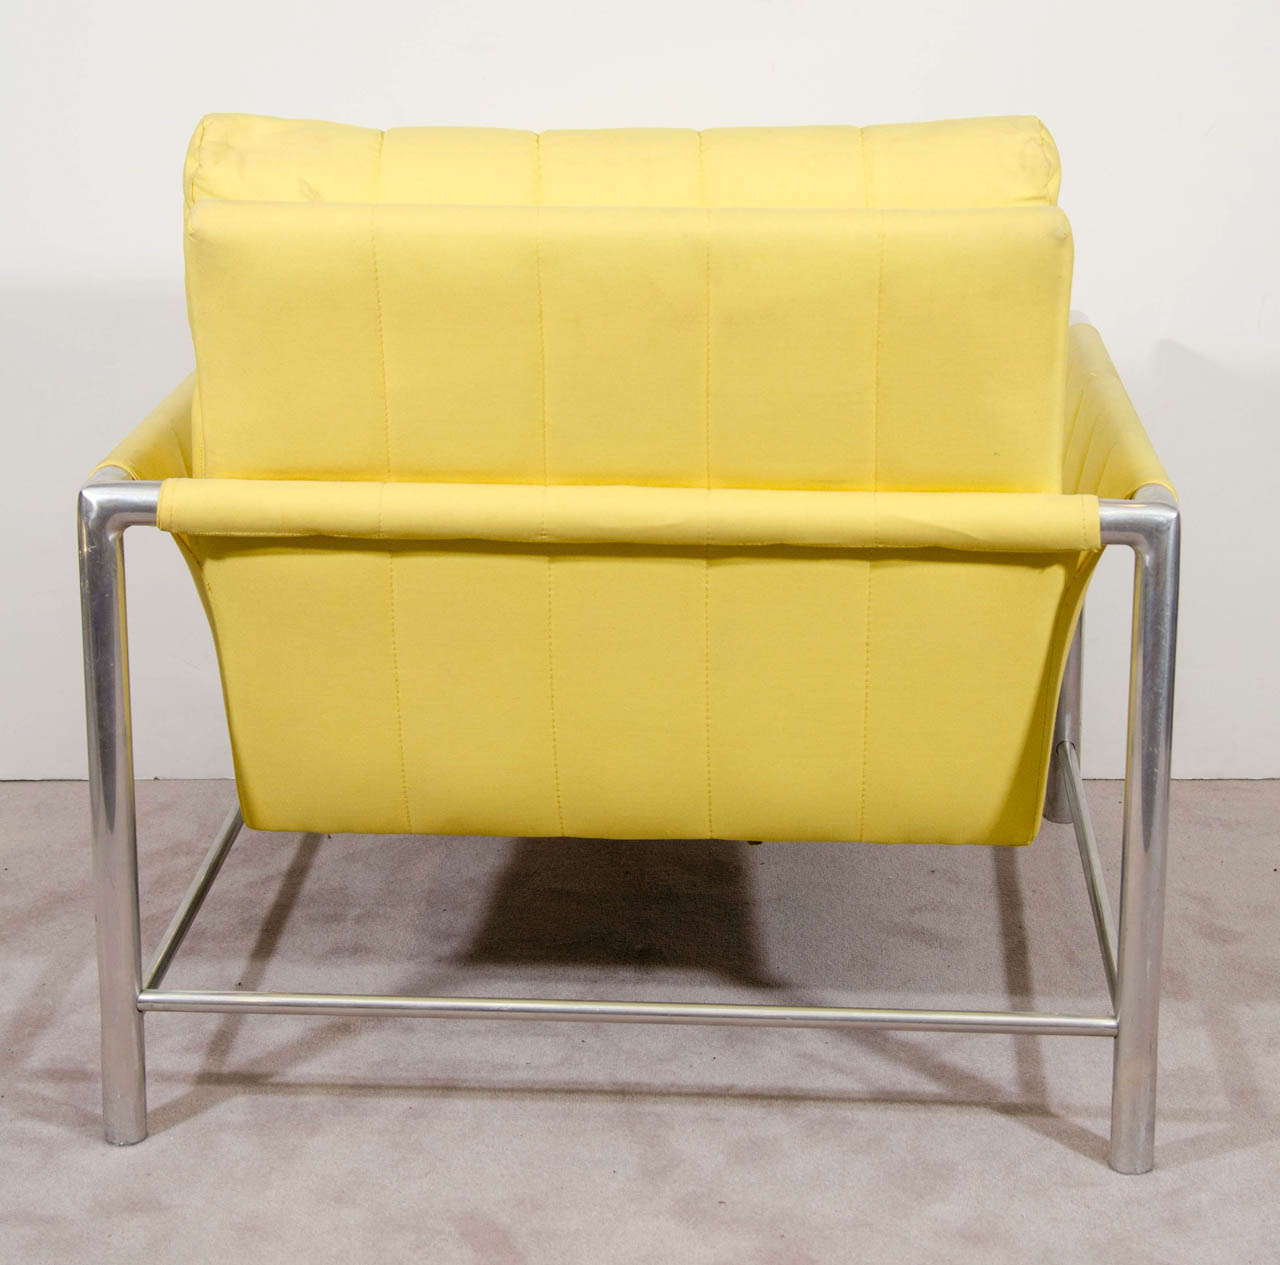 20th Century A Mid Century Milo Baughman Style Armchair in Lemon Yellow Fabric